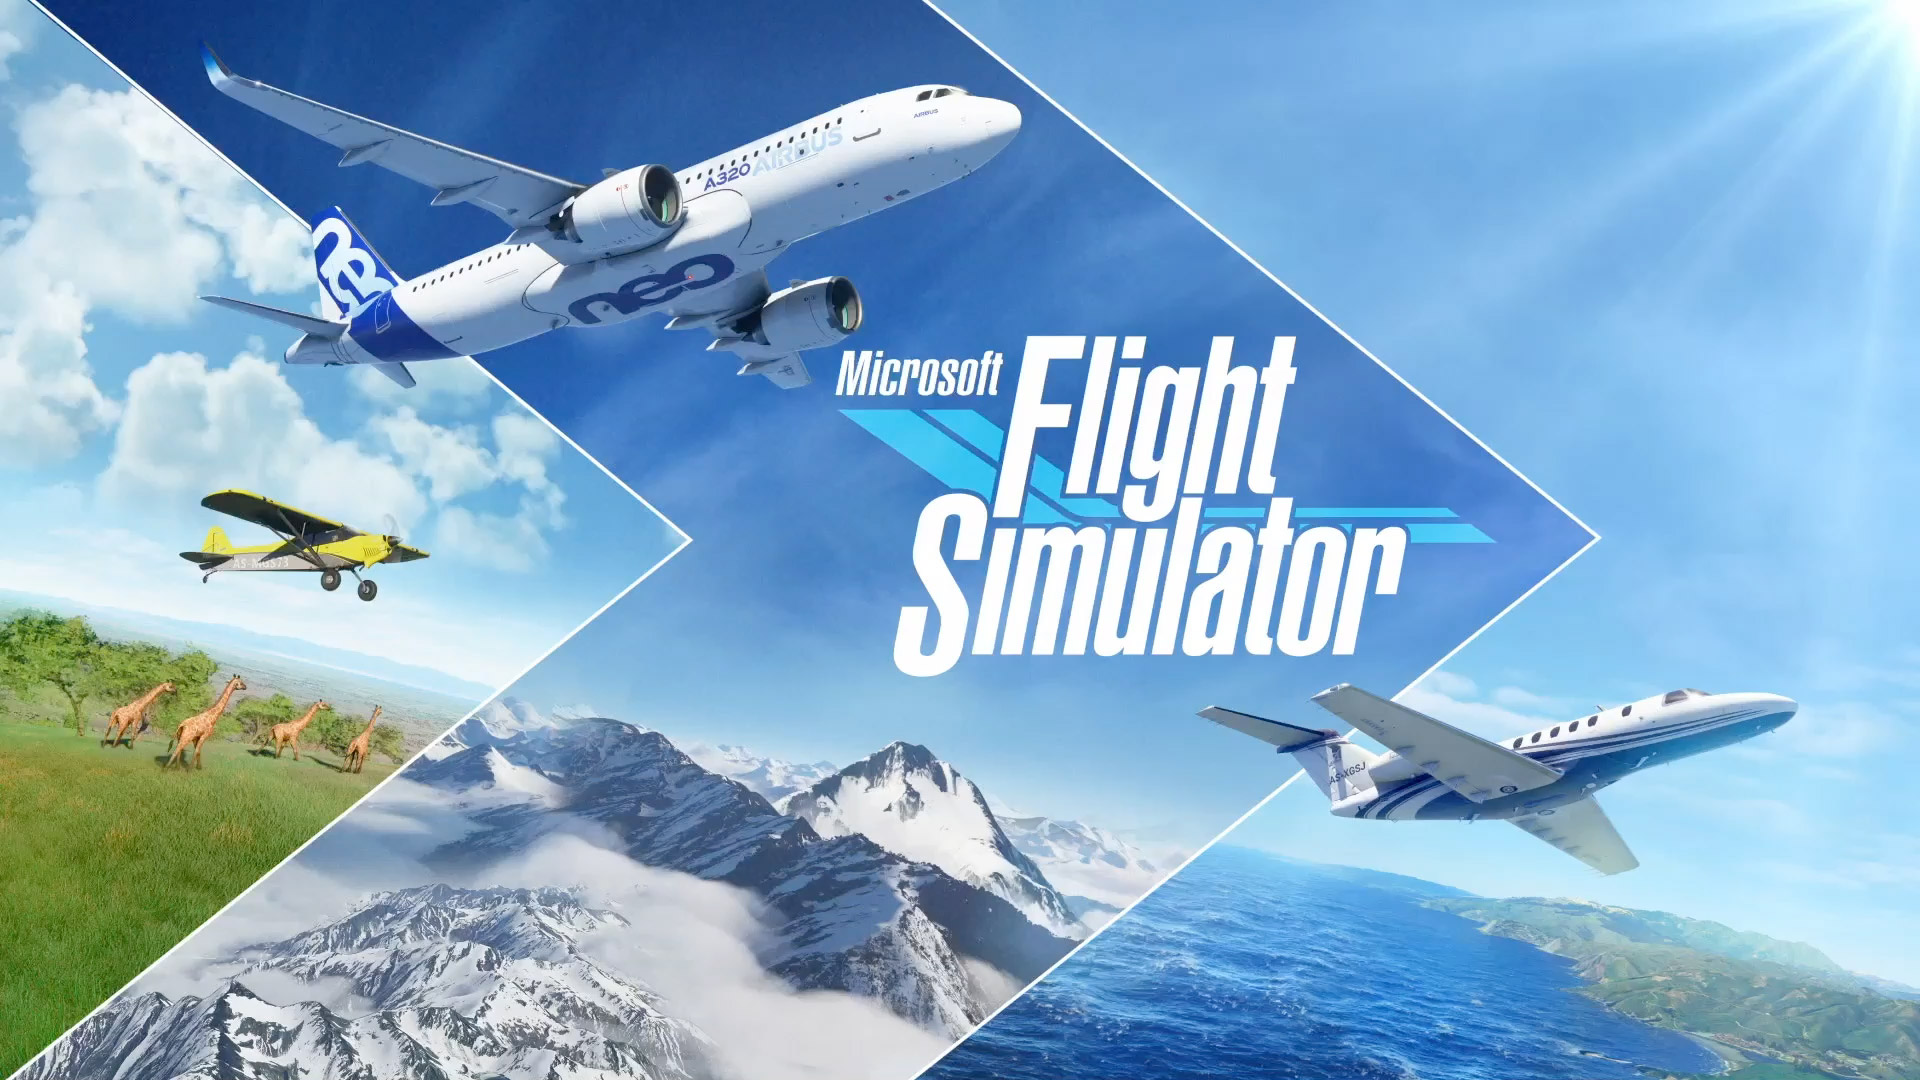 spaceflight simulator 1.5 pc download